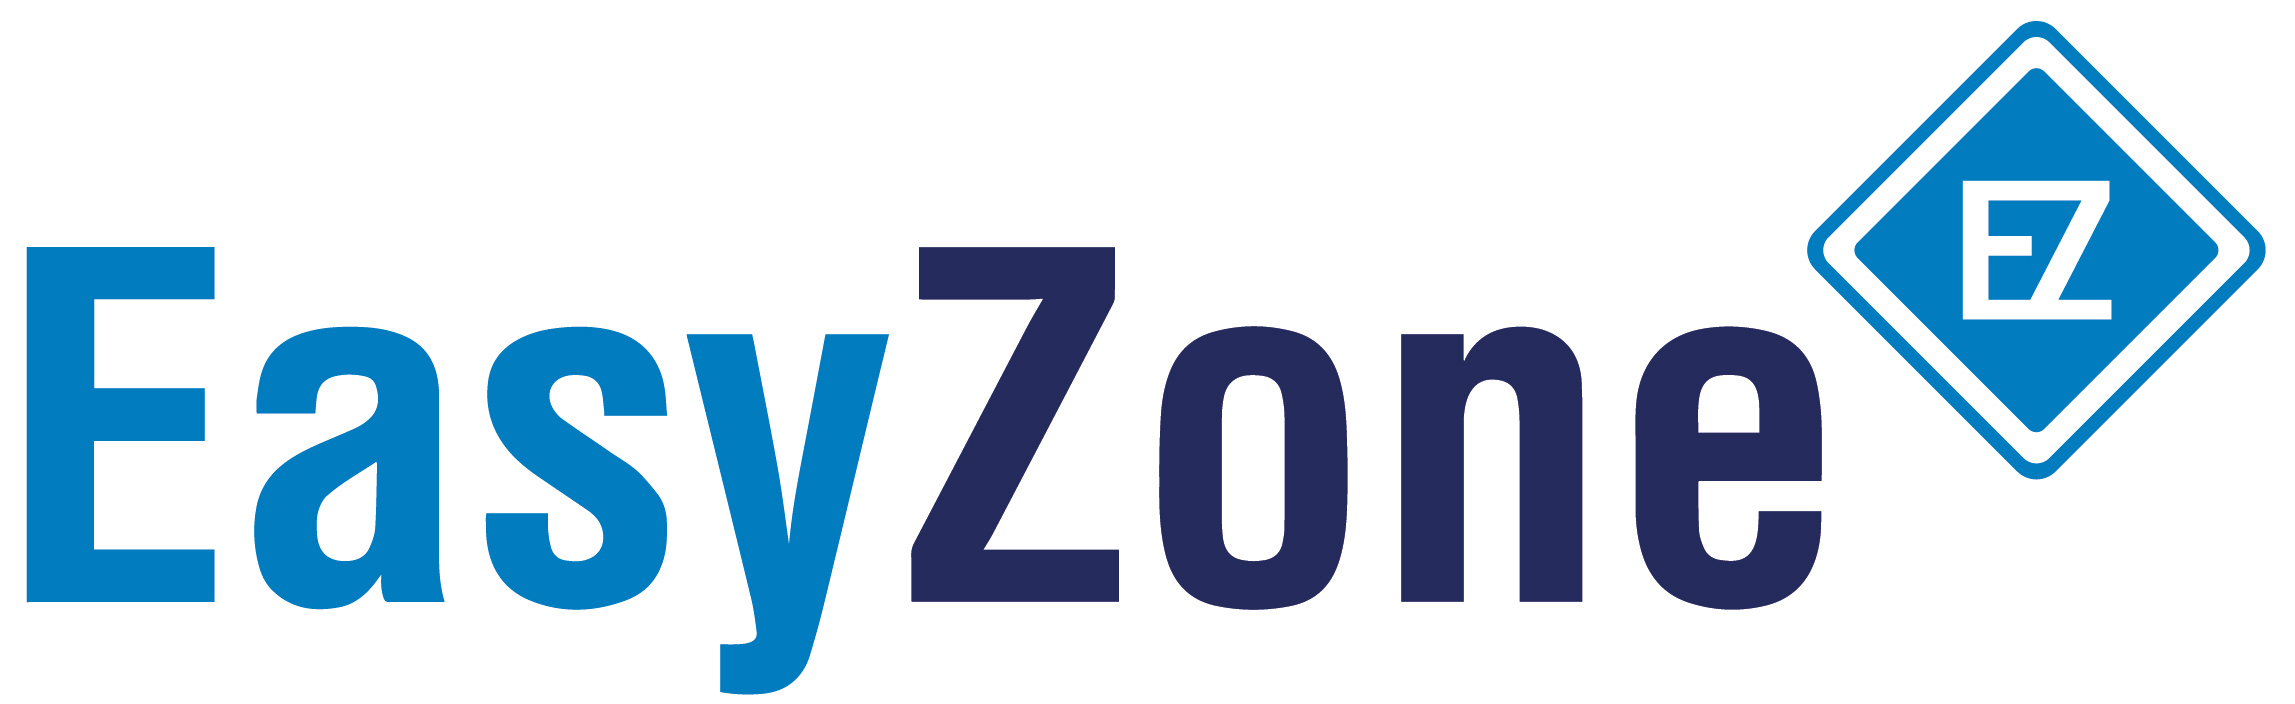 Easyzone Logo